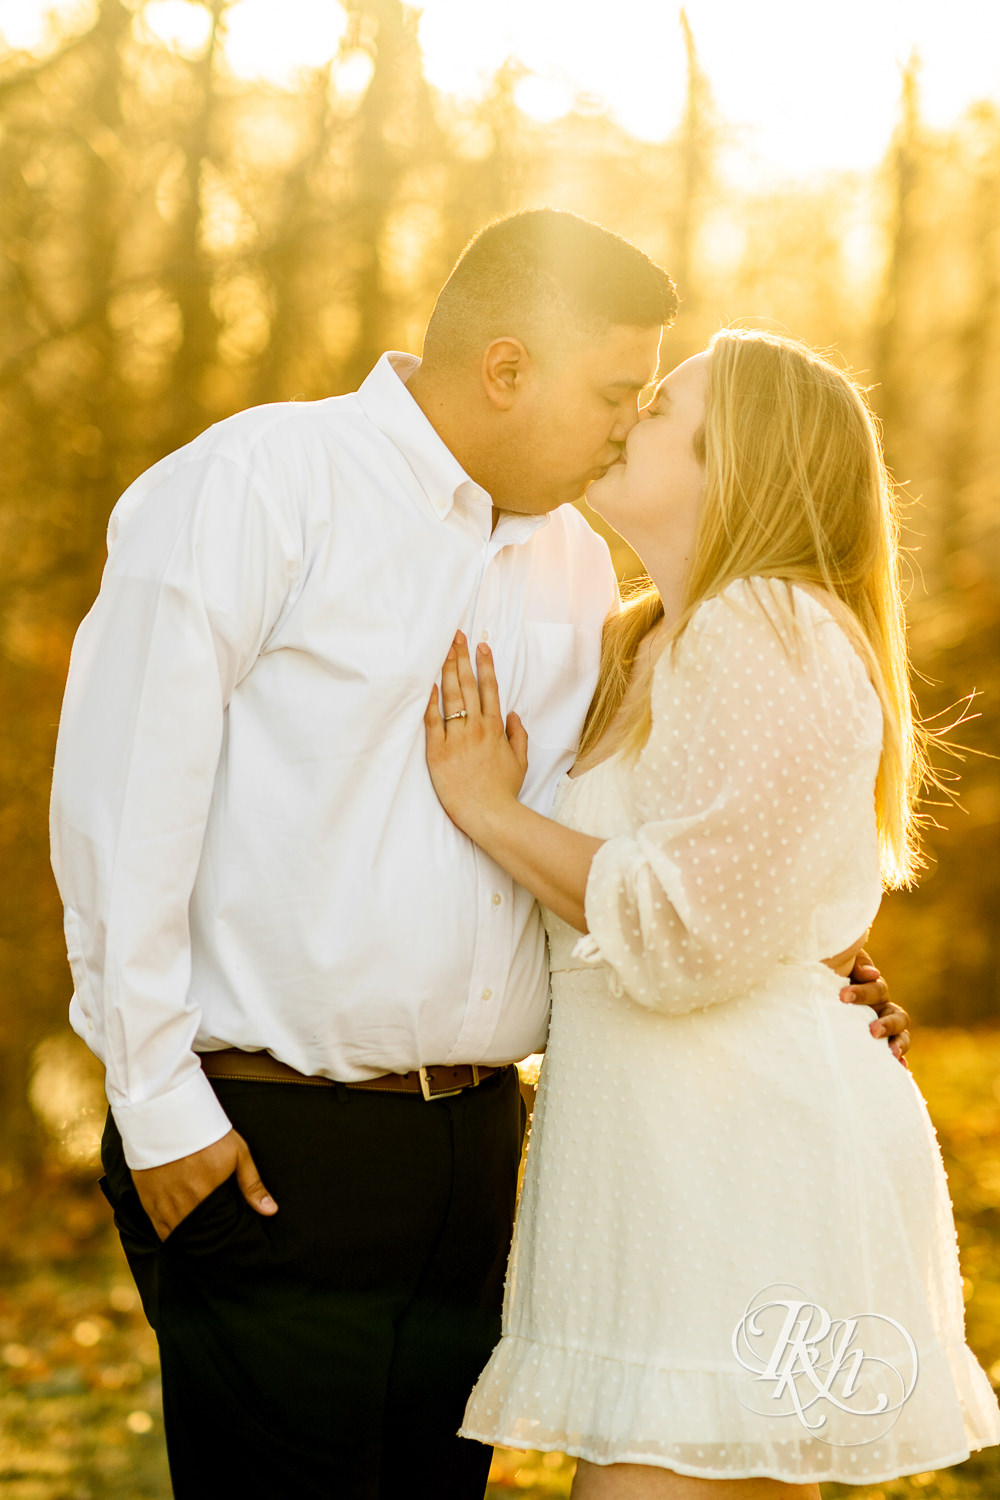 Filipino man and woman in white dress kiss during sunset at Lebanon Hills in Eagan, Minnesota.